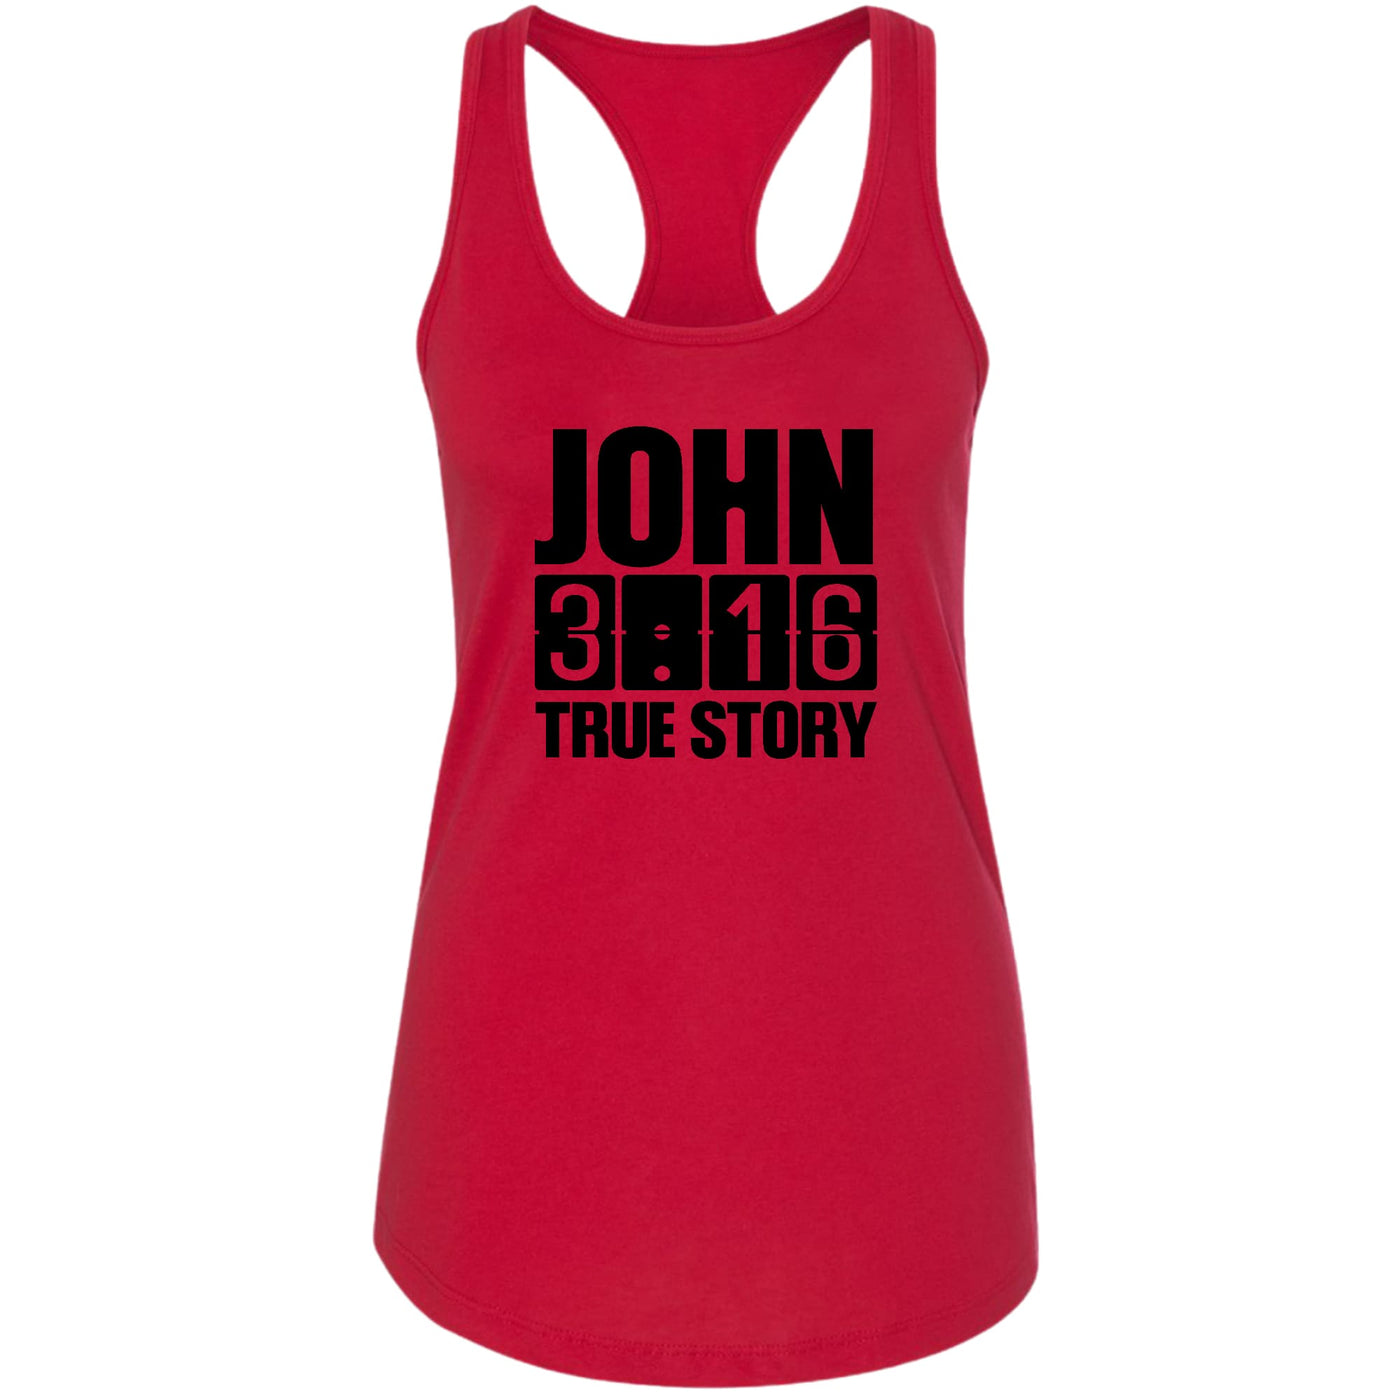 Womens Tank Top Fitness T - shirt John 3:16 True Story Print - Tops